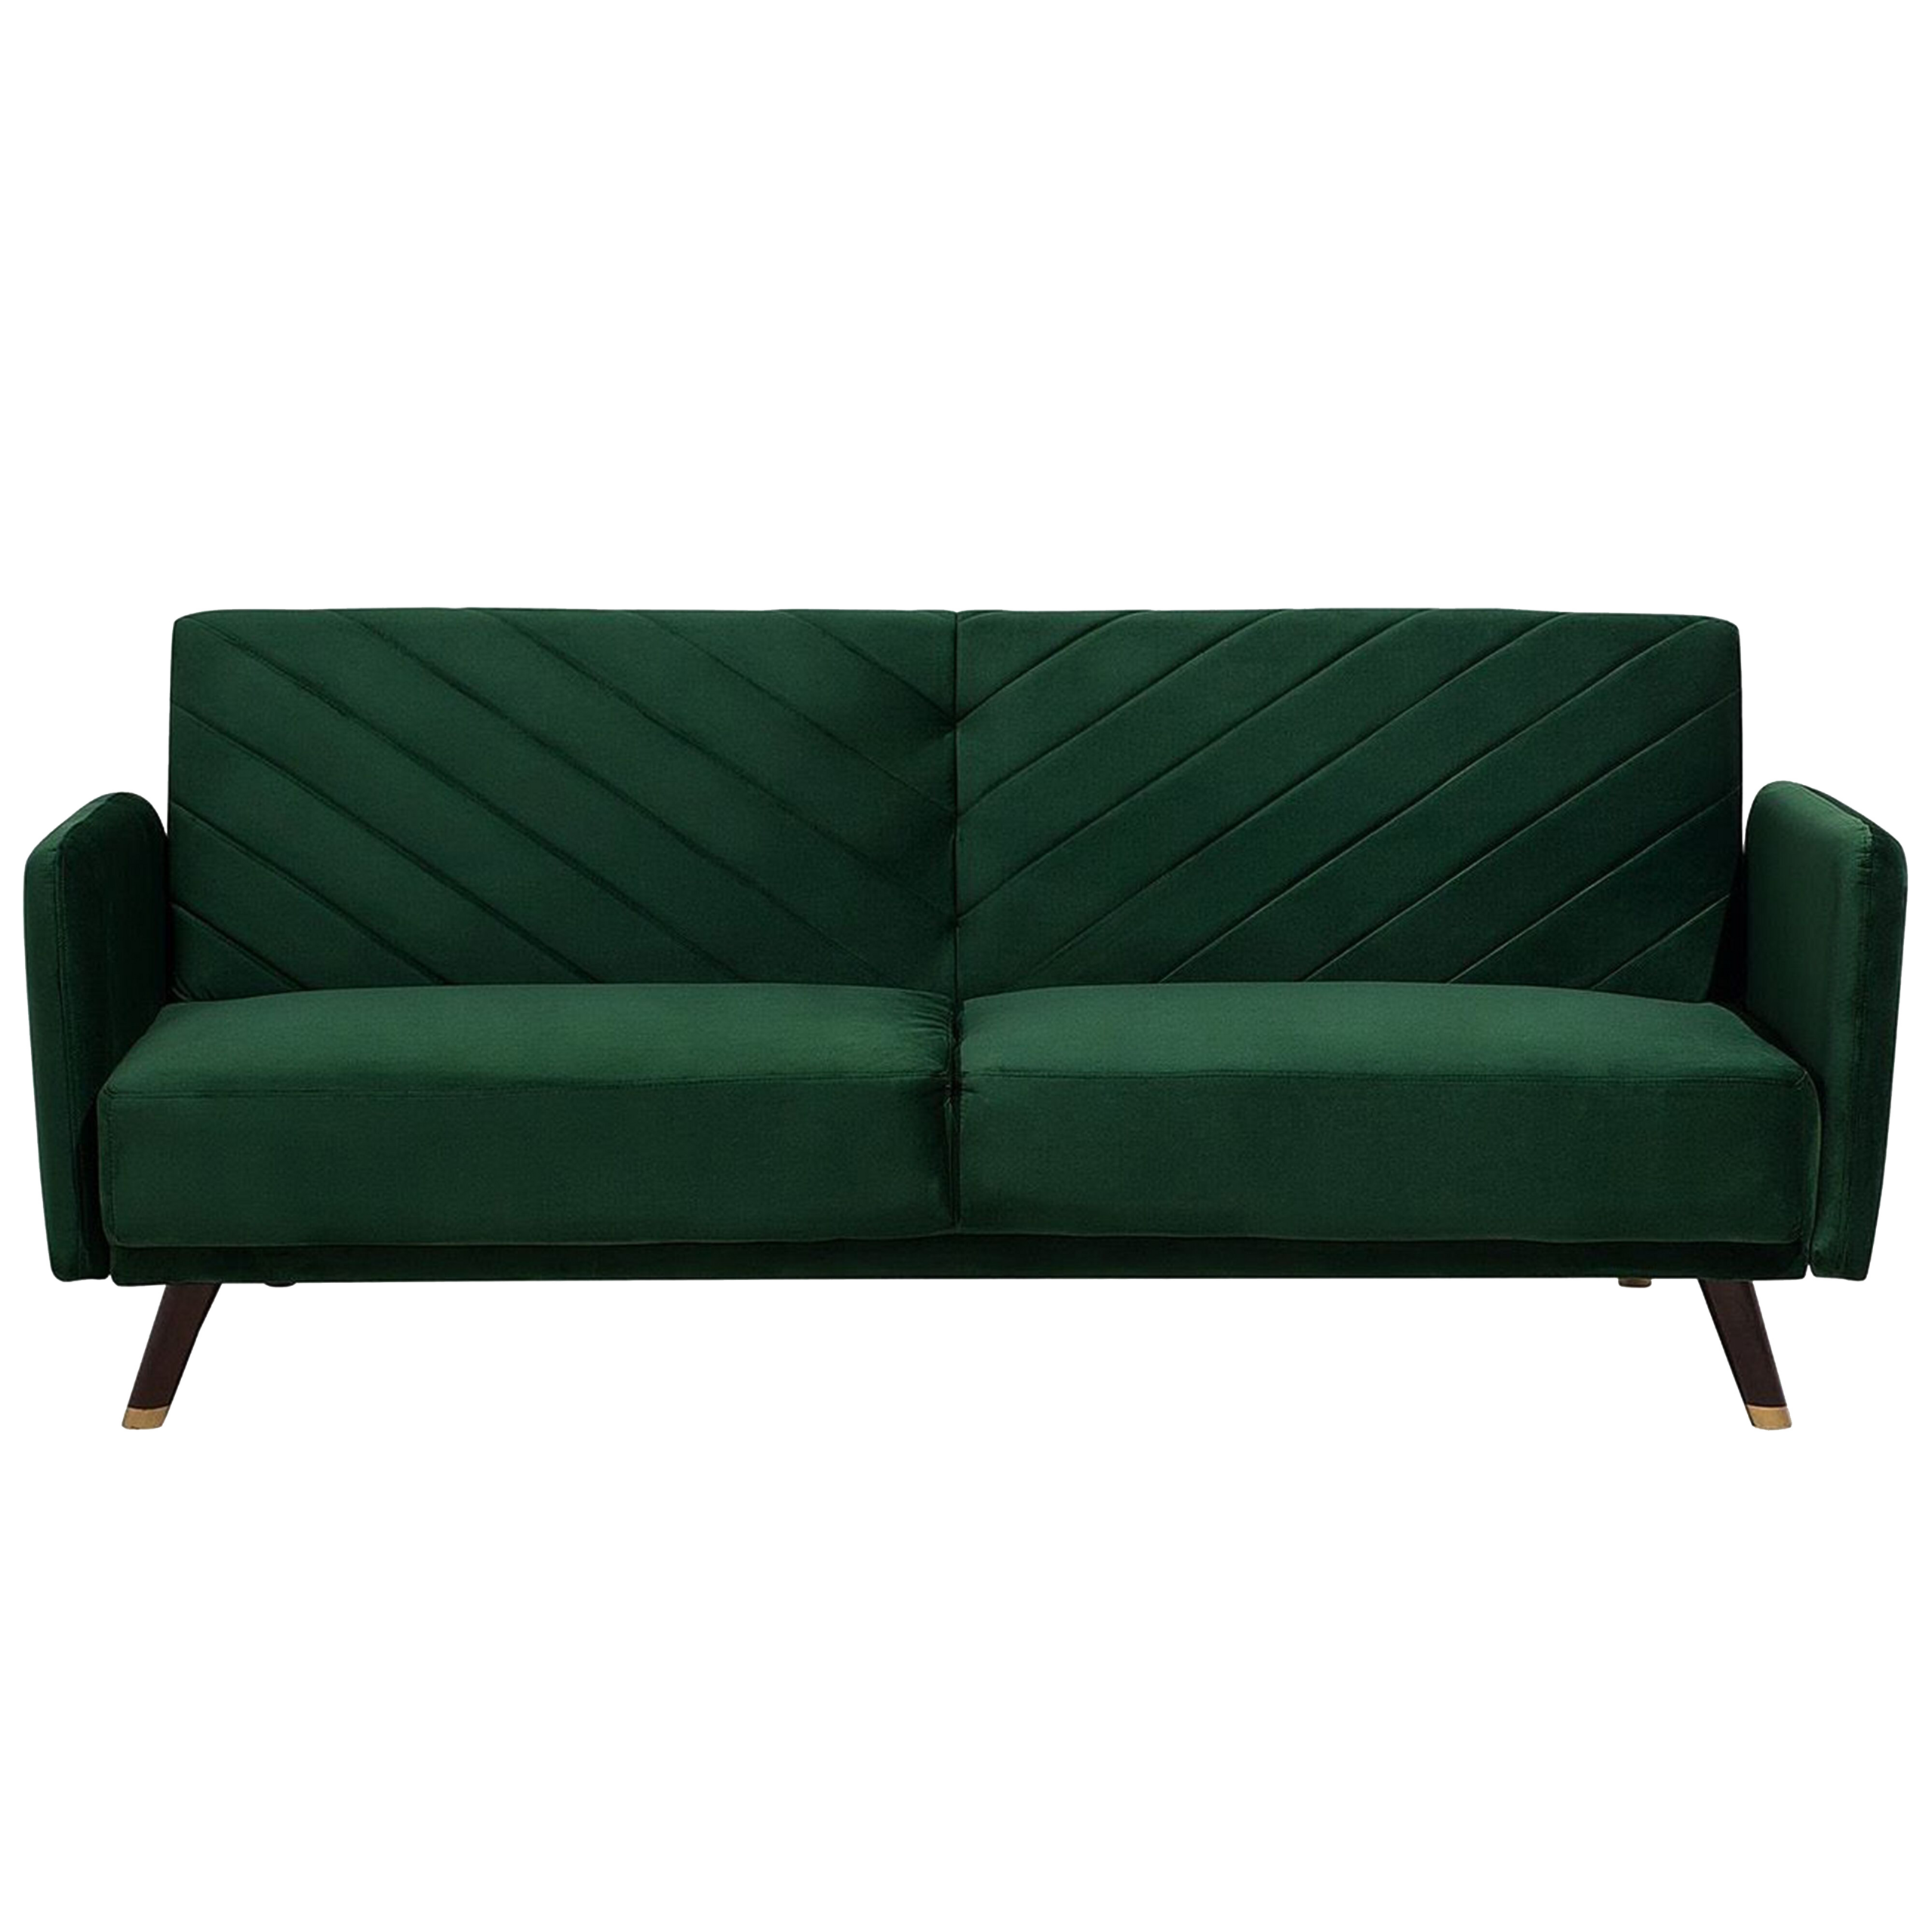 Beliani Sofa Bed Emerald Green Velvet Fabric Modern Living Room 3 Seater Wooden Legs Track Arm